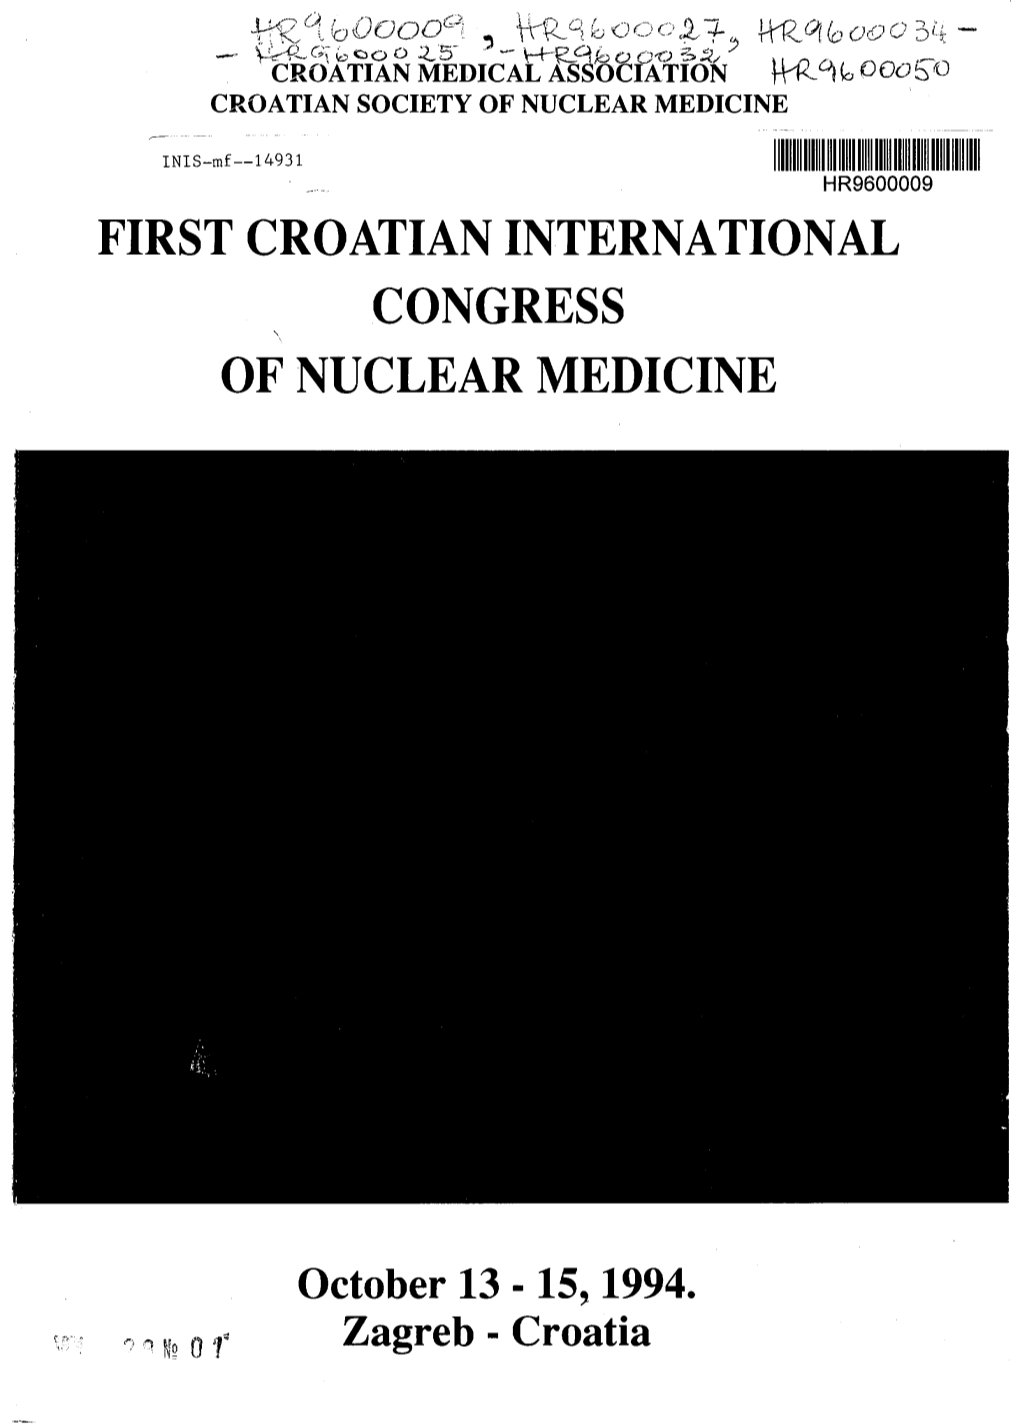 First Croatian International Congress of Nuclear Medicine